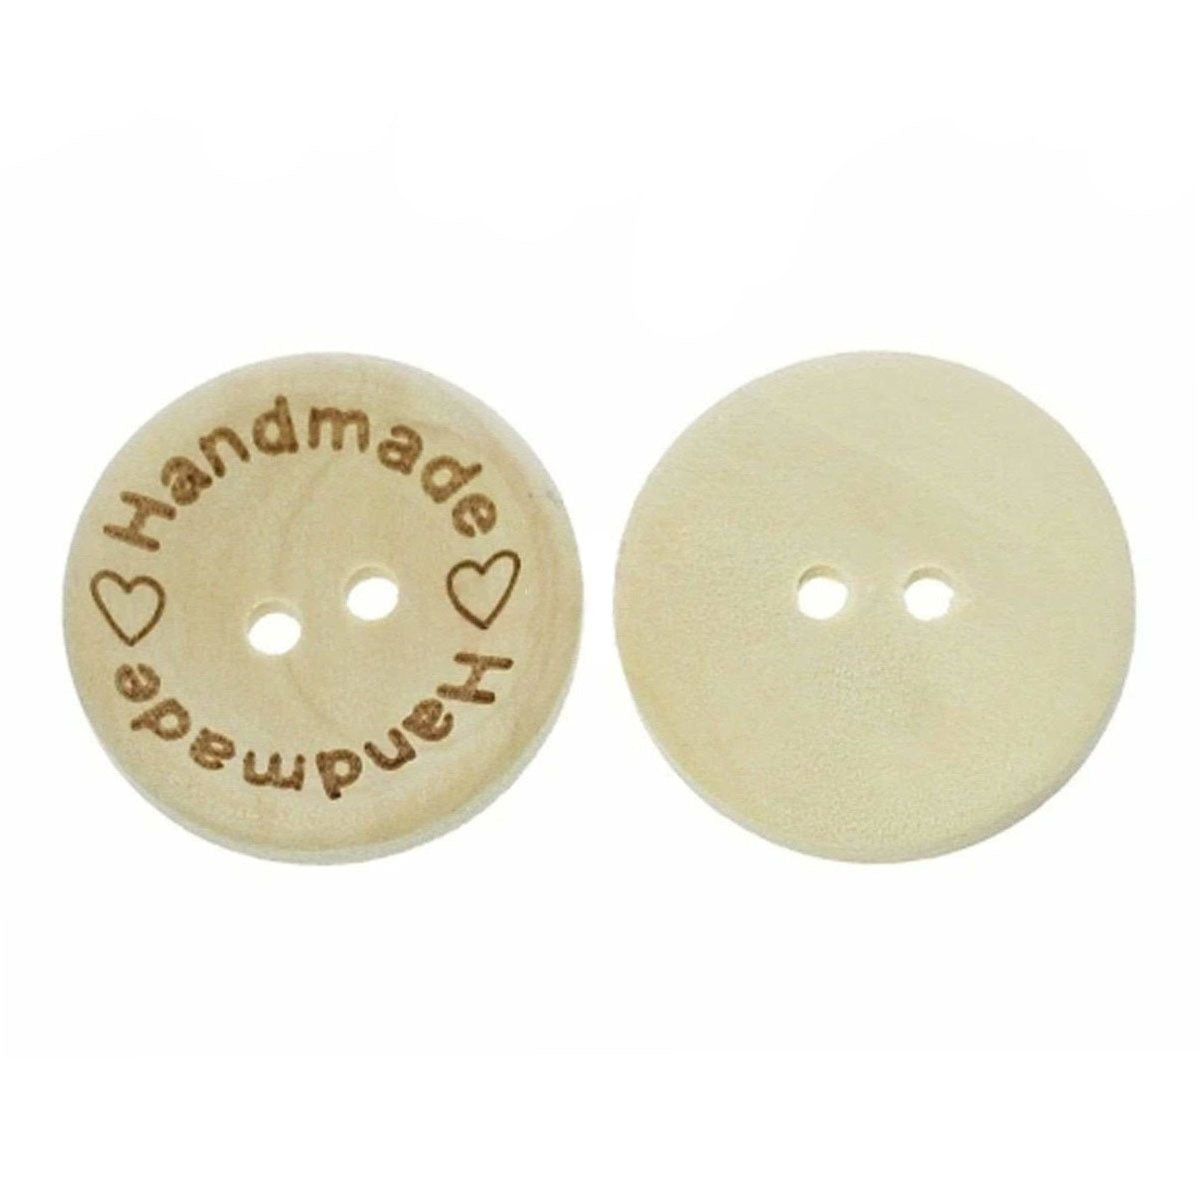 25x 15mm "Handmade Handmade" Round Wooden Buttons Handmade Clothes - Asia Sell